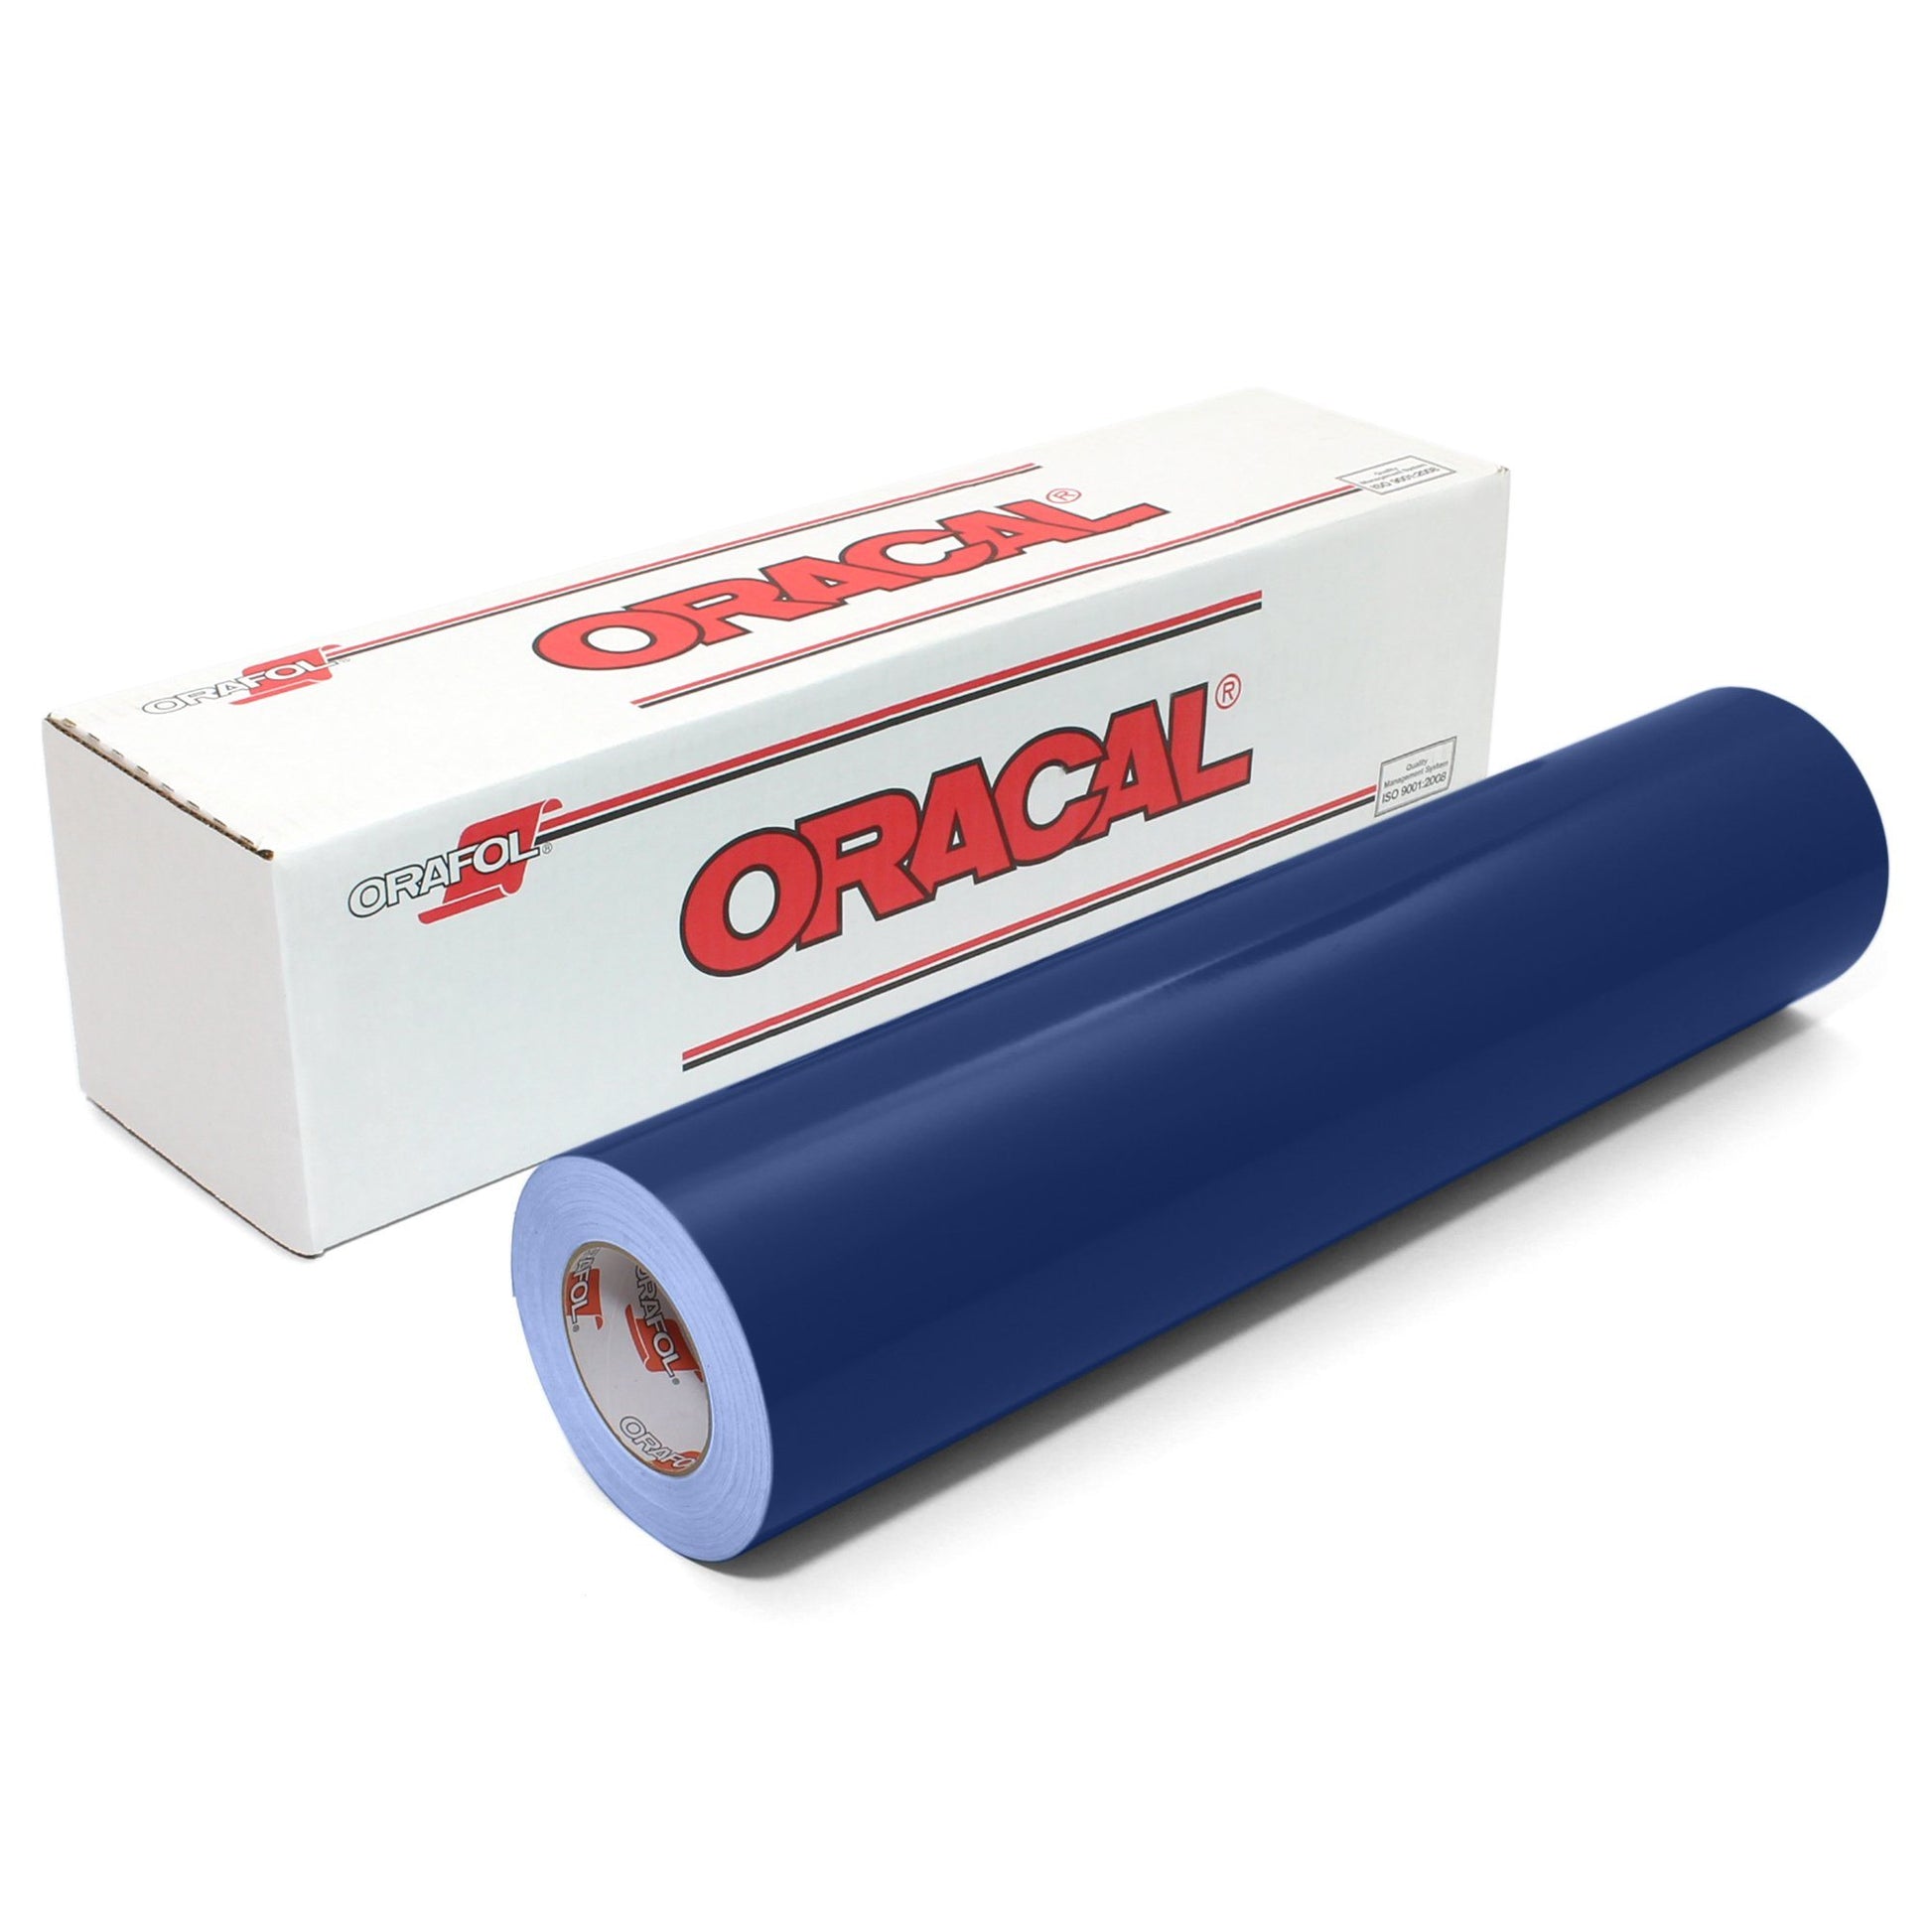 10 FT Roll of Oracal 651 Vinyl – Mimic Brands